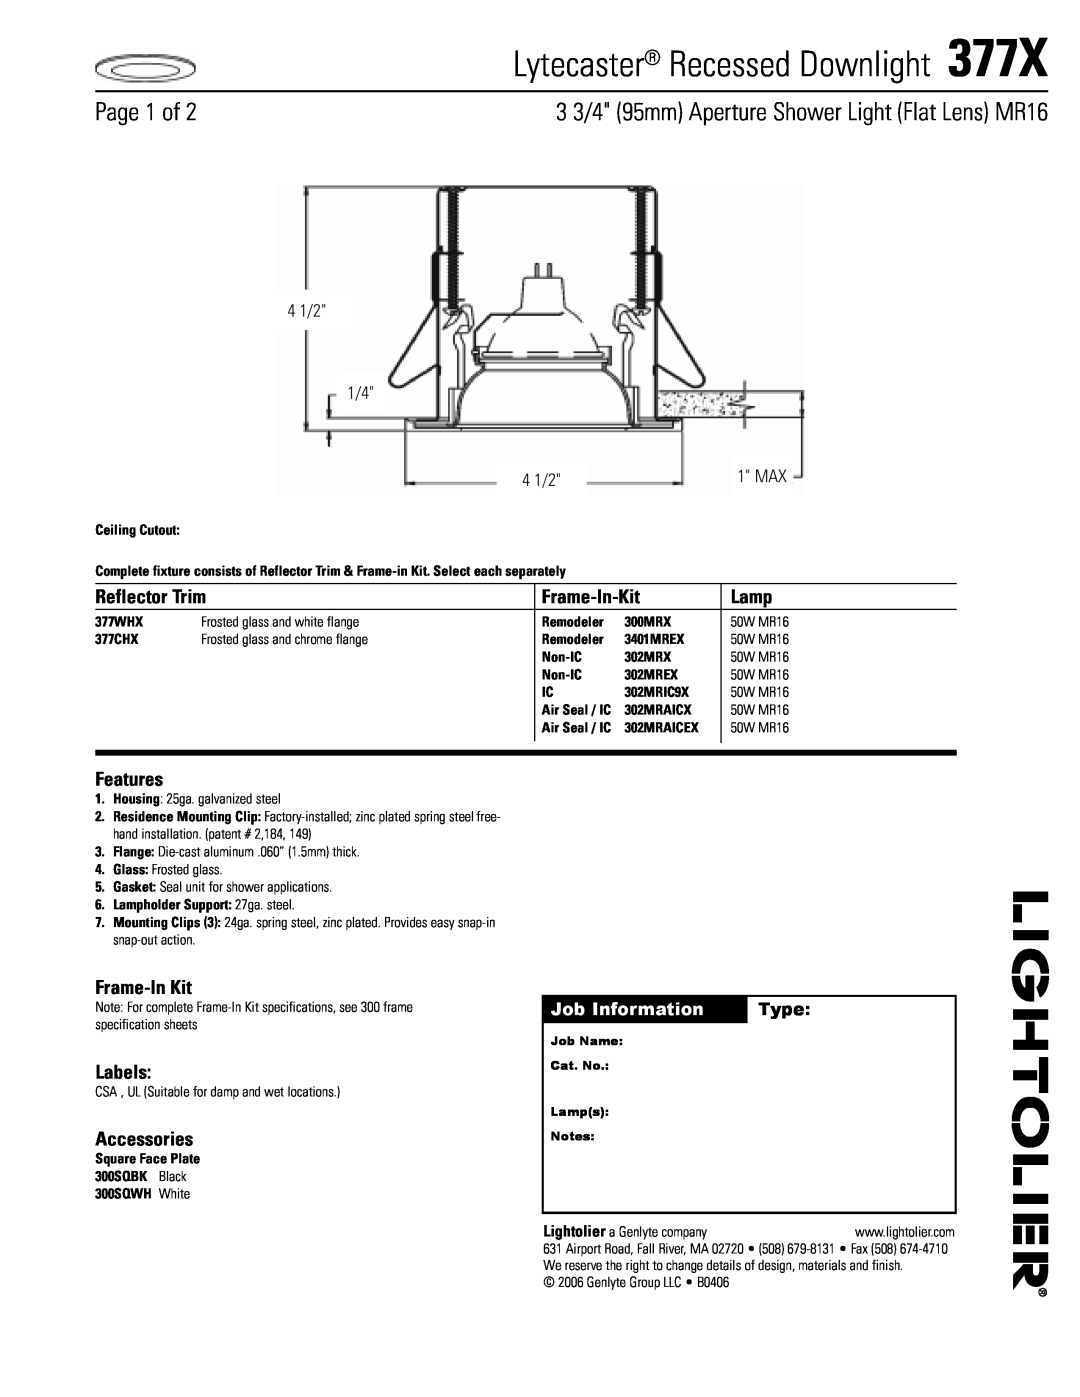 Lightolier 377X specifications Page  of, 3 3/4 95mm Aperture Shower Light Flat Lens MR16, 4 1/2, Job Information, Type 